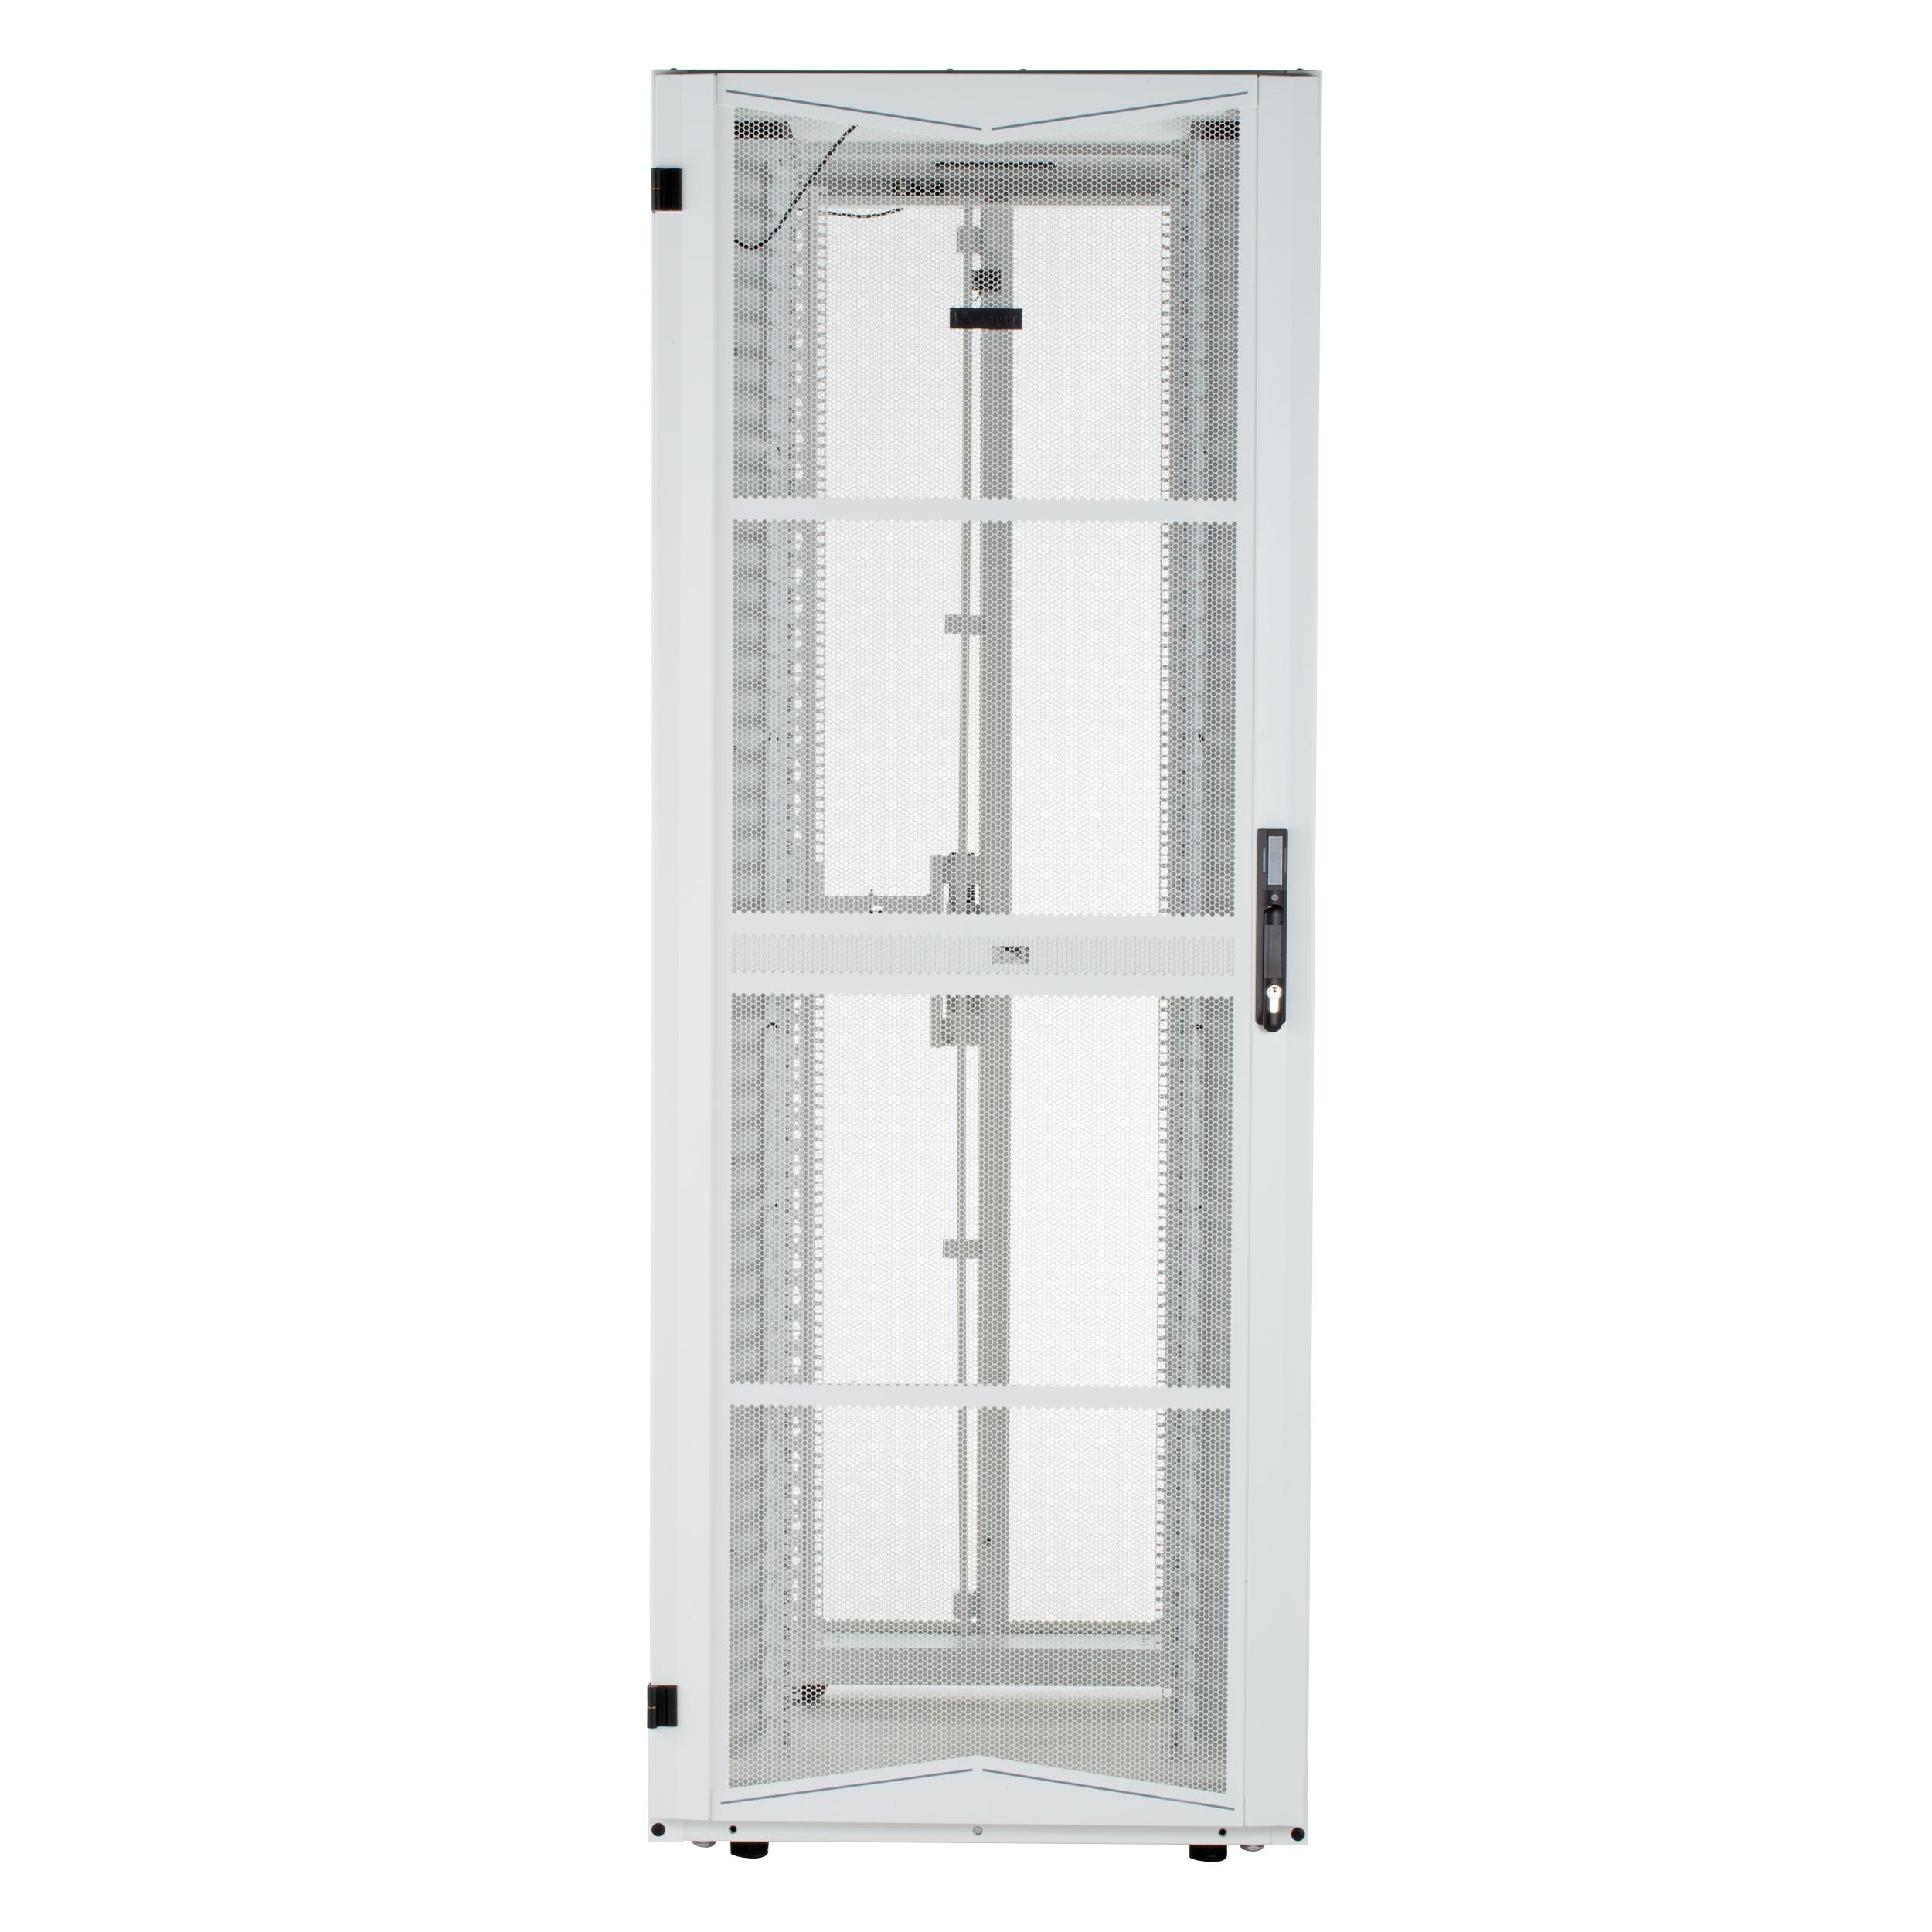 Panduit XG84222WS0001 FlexFusion Cabinet, 800mm x 42RU x 1200mm, White